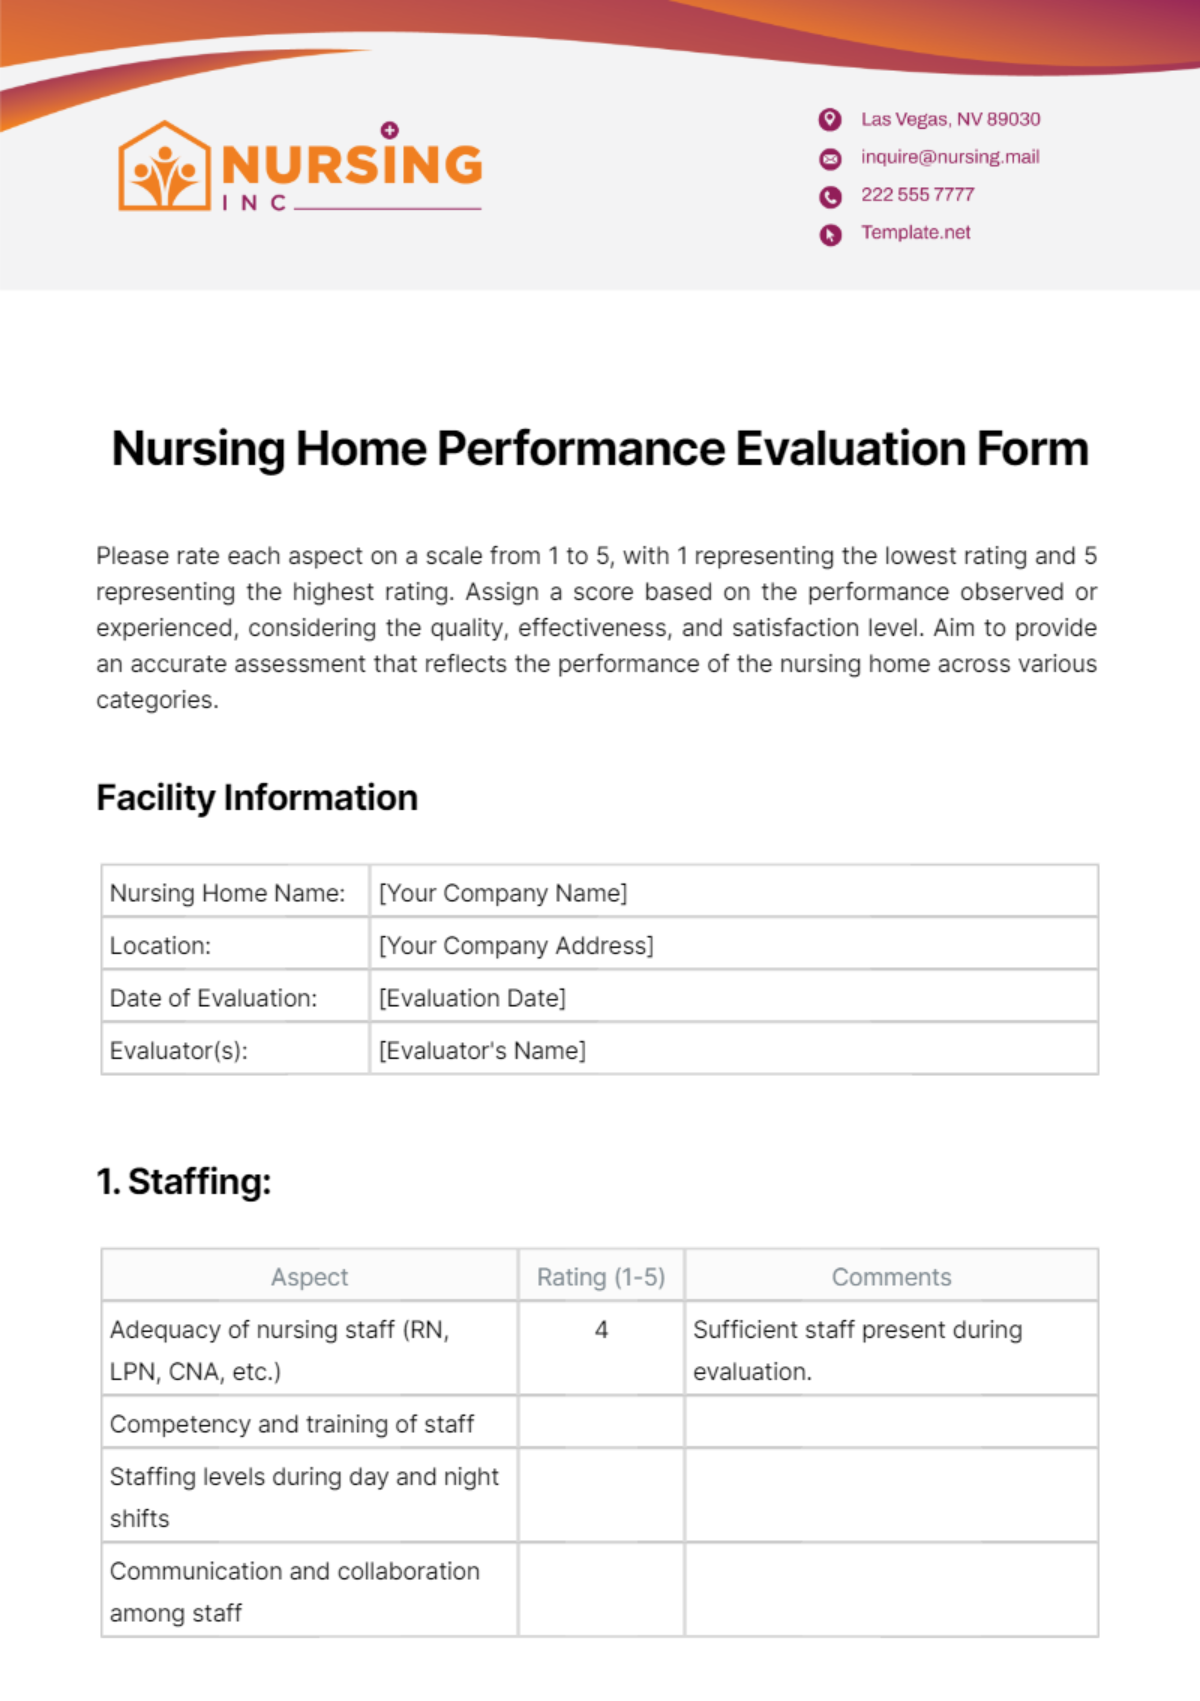 Nursing Home Performance Evaluation Form Template